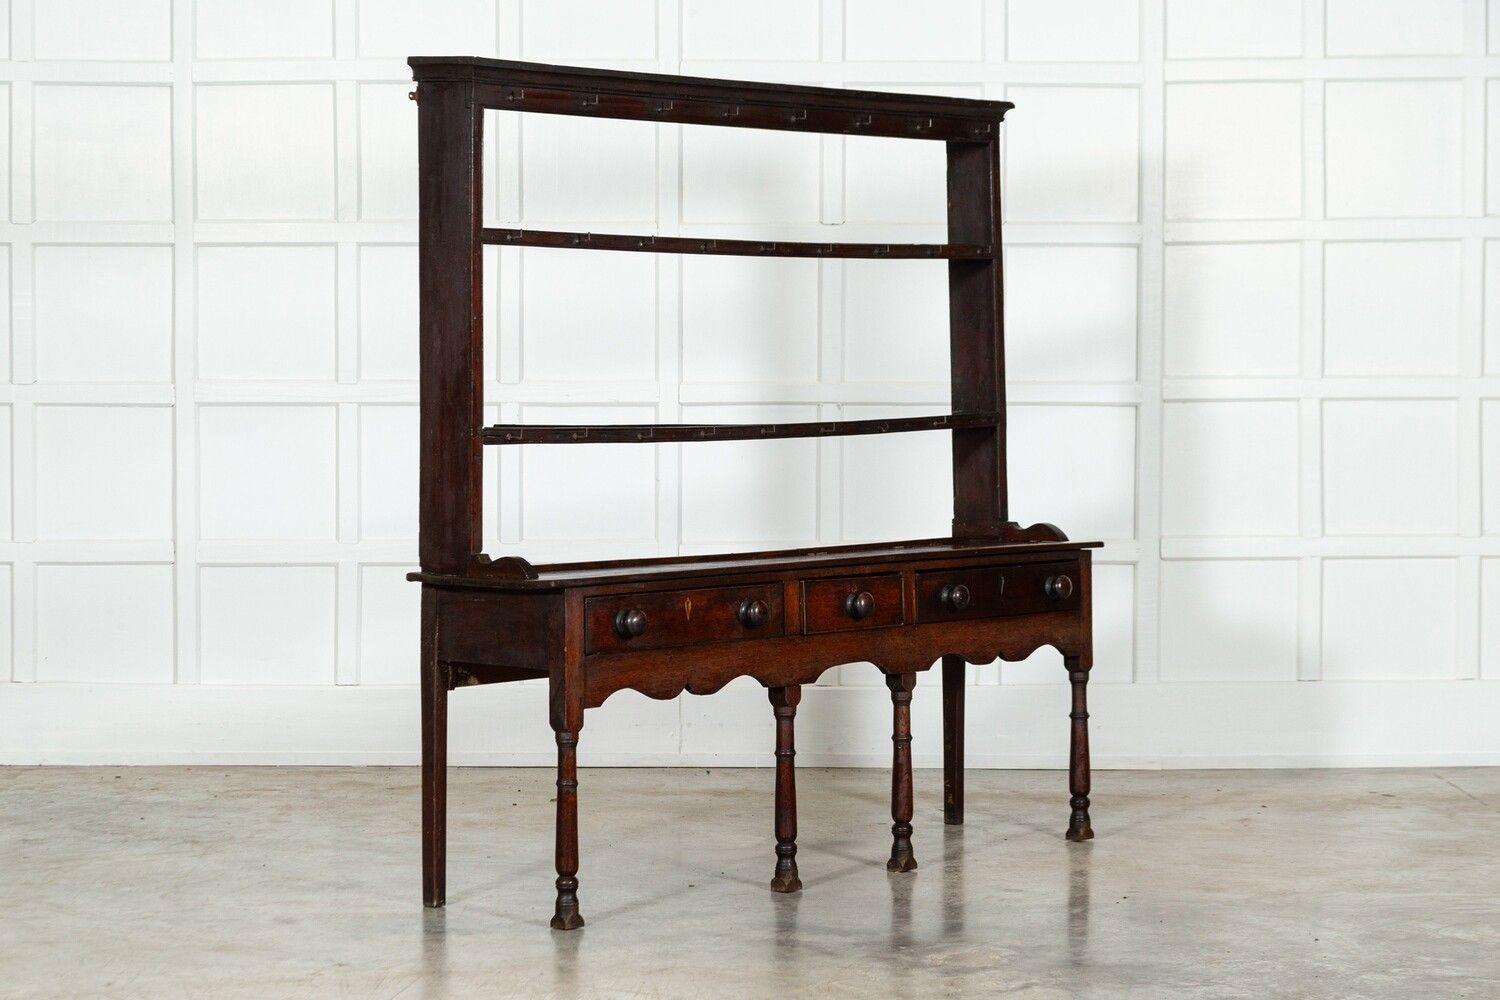 circa 1780
18thC English Oak Dresser
sku 1676
W167 x D40 x H162 cm